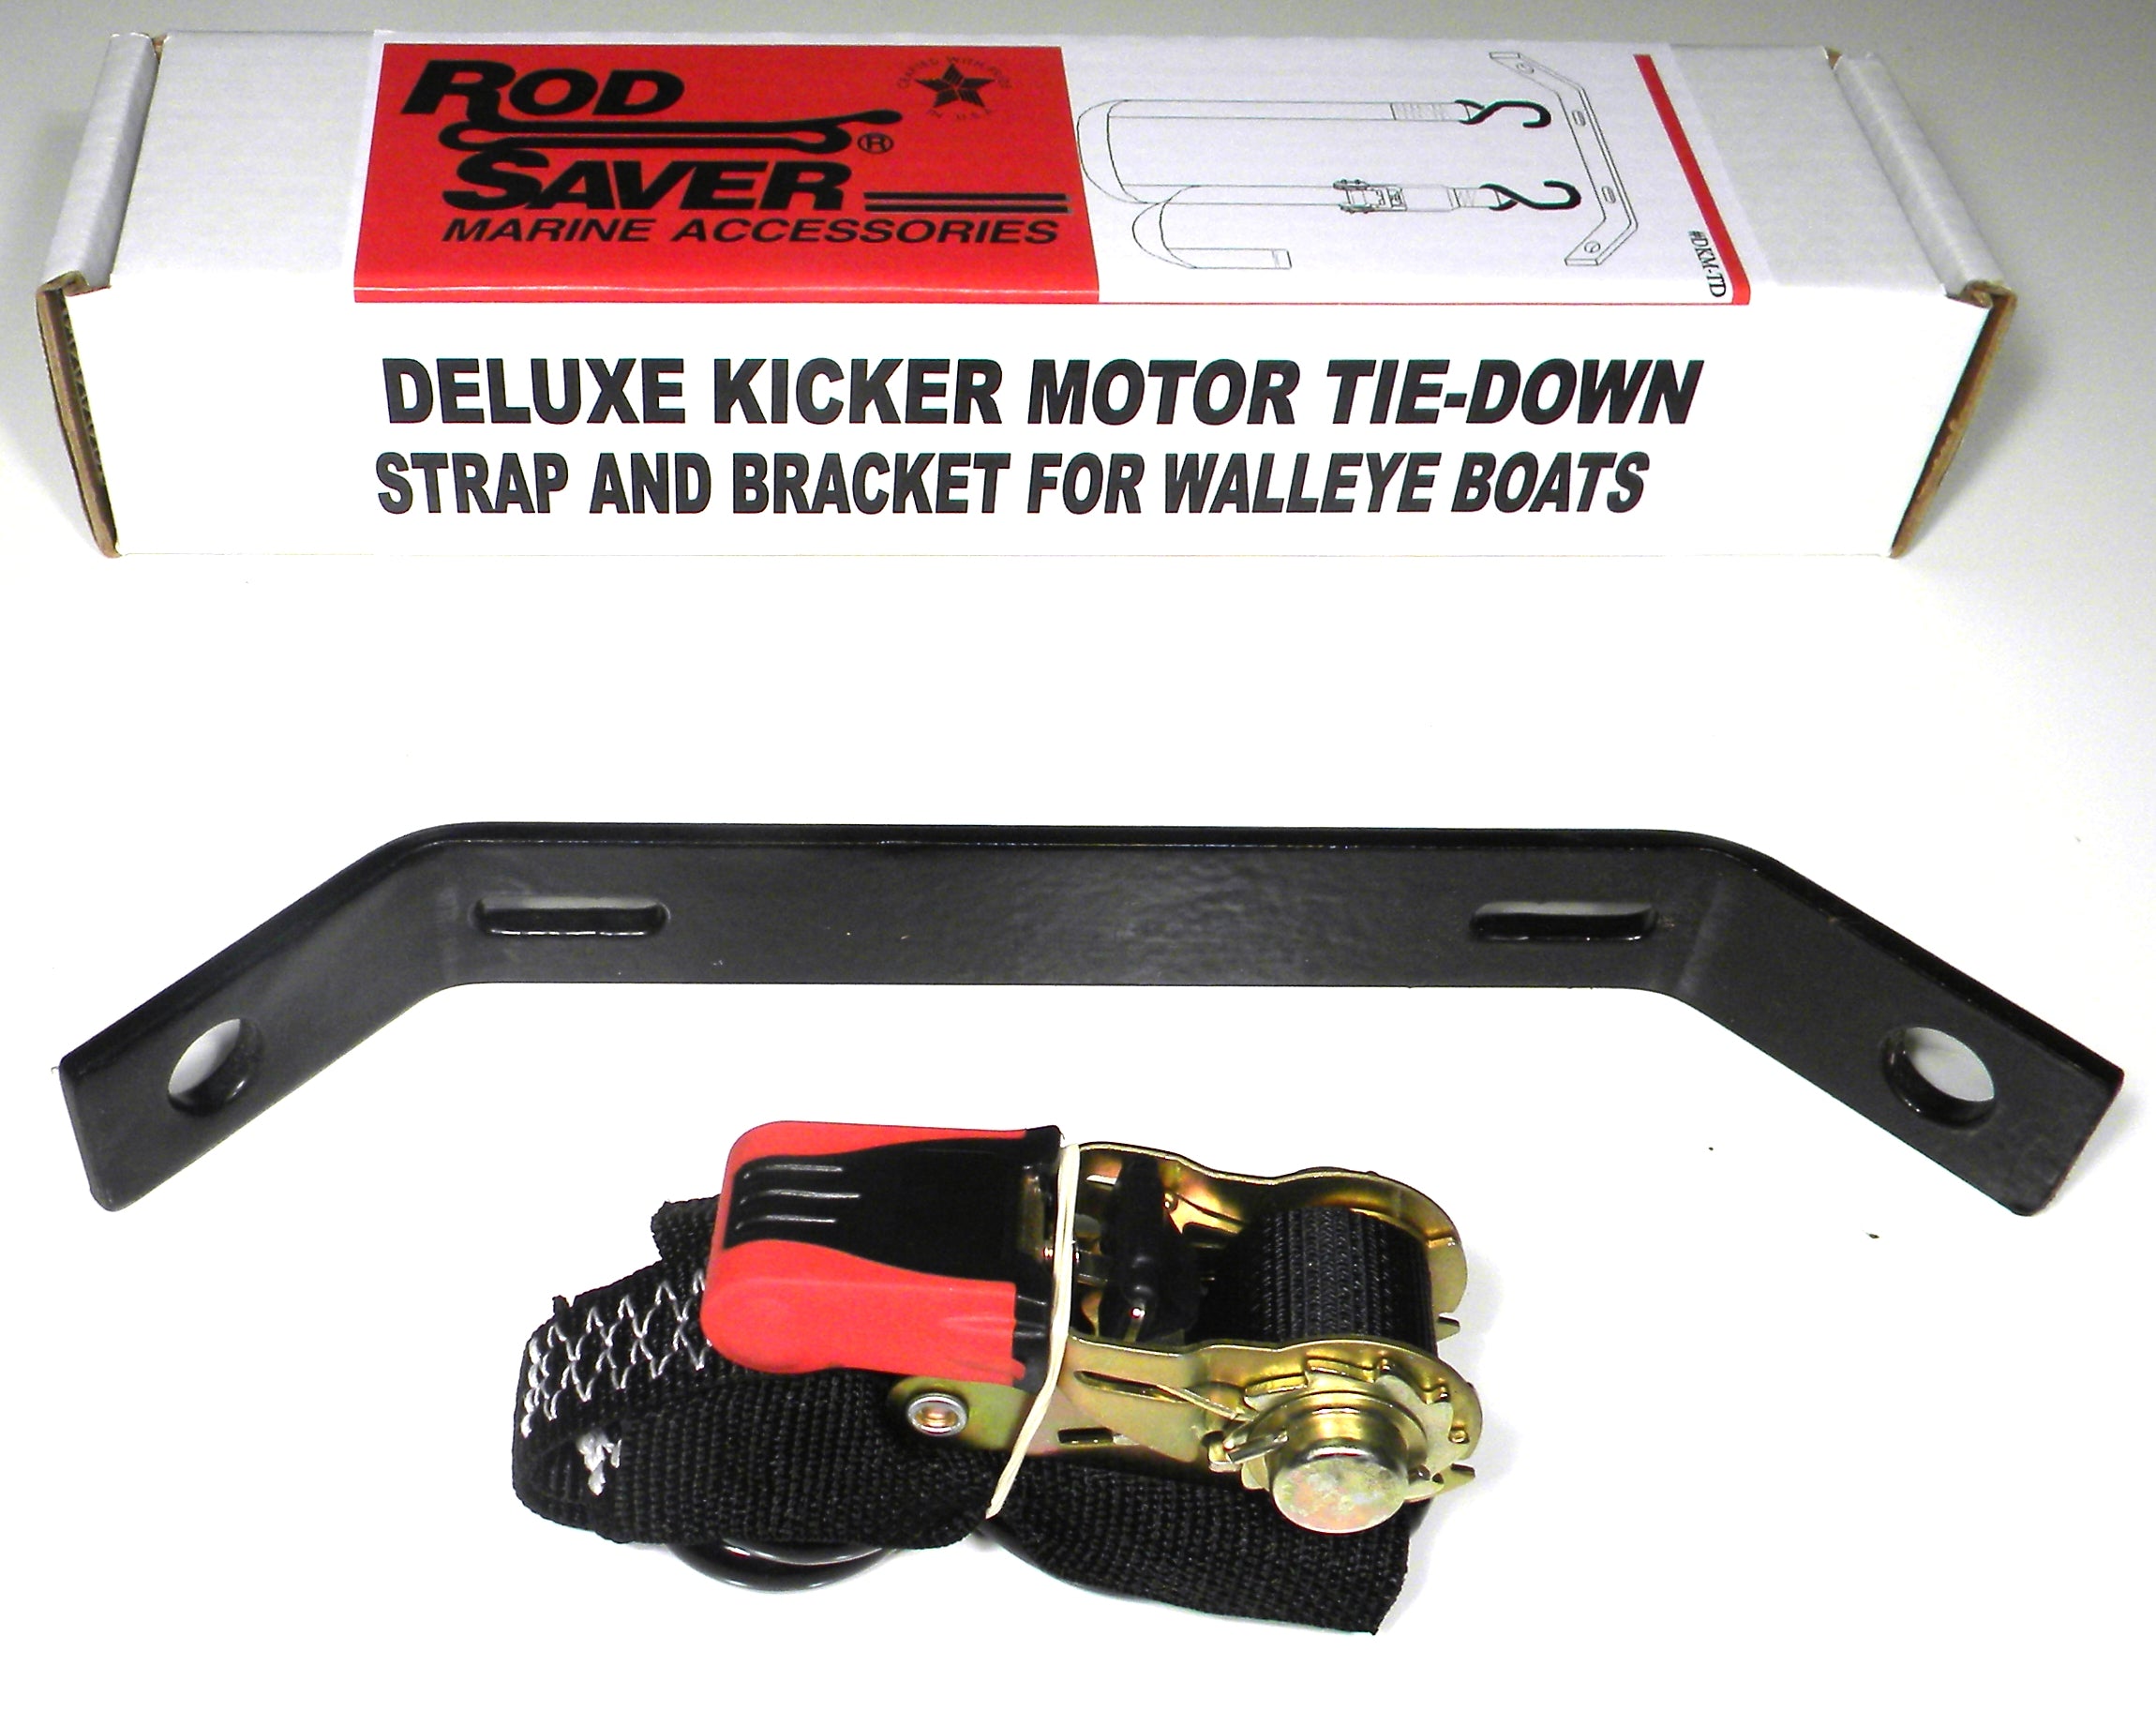 DKMS - Deluxe Kicker Motor Tie-Down – Rod Saver